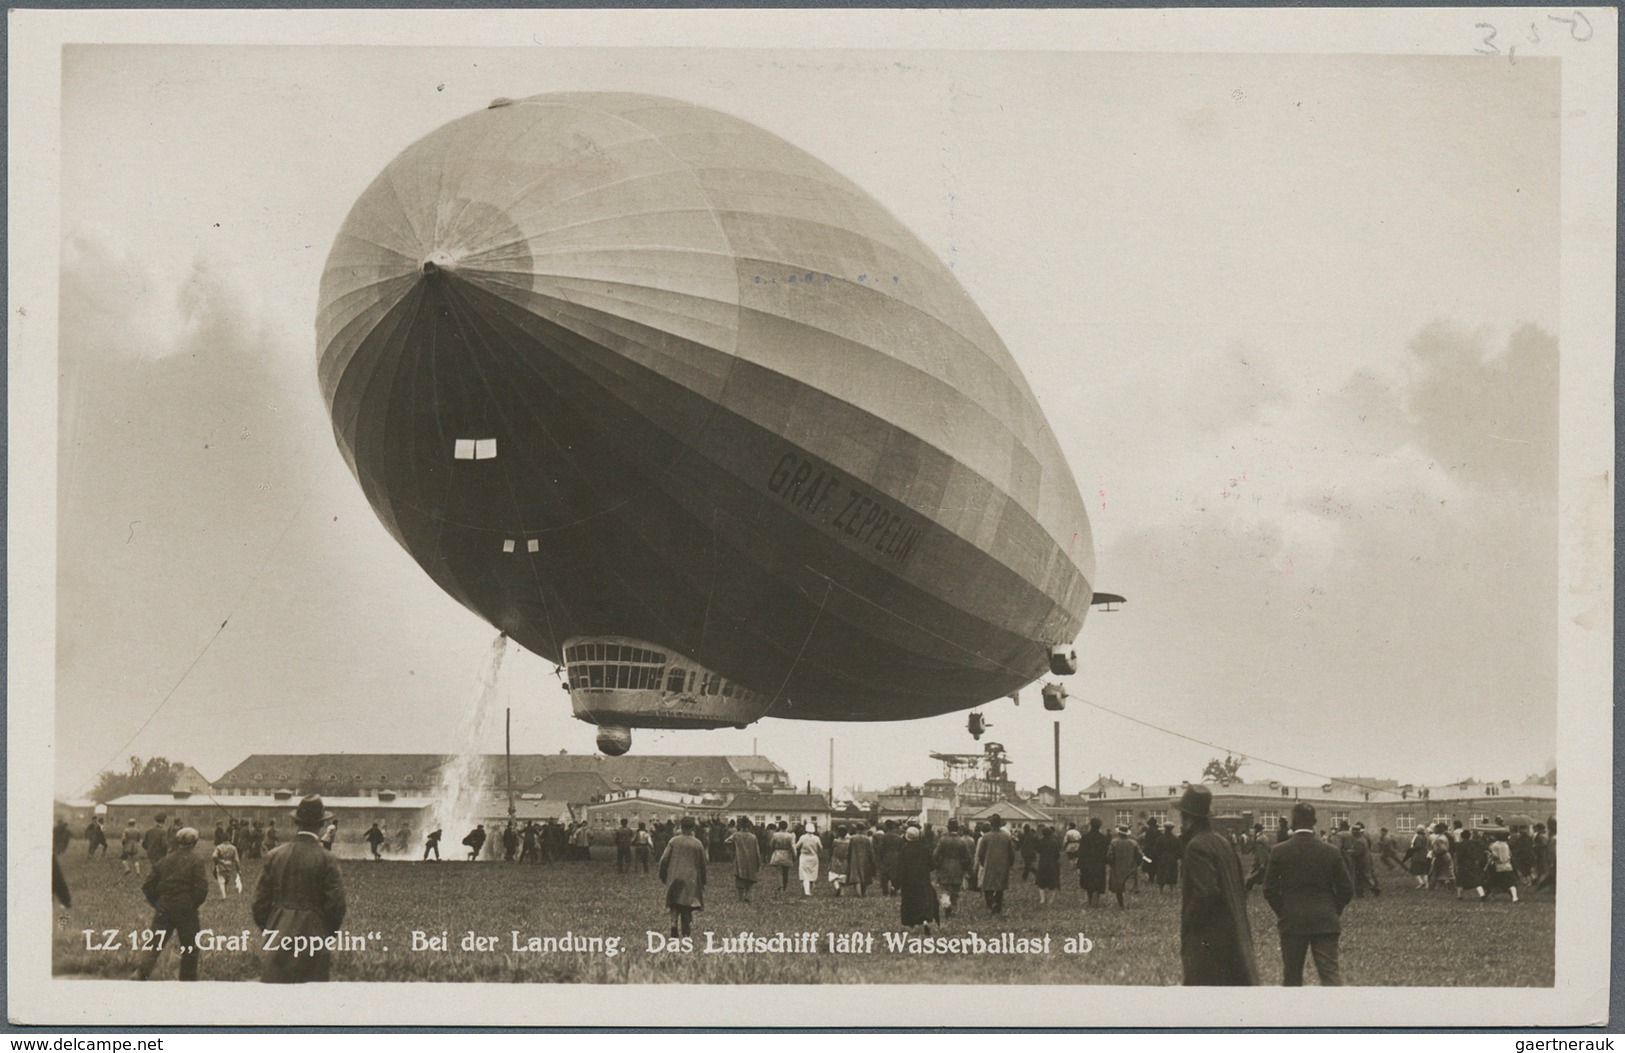 Zeppelinpost Deutschland: Collection of 71 Zeppelin cards and covers, ca 60 flown + several Hindenbu